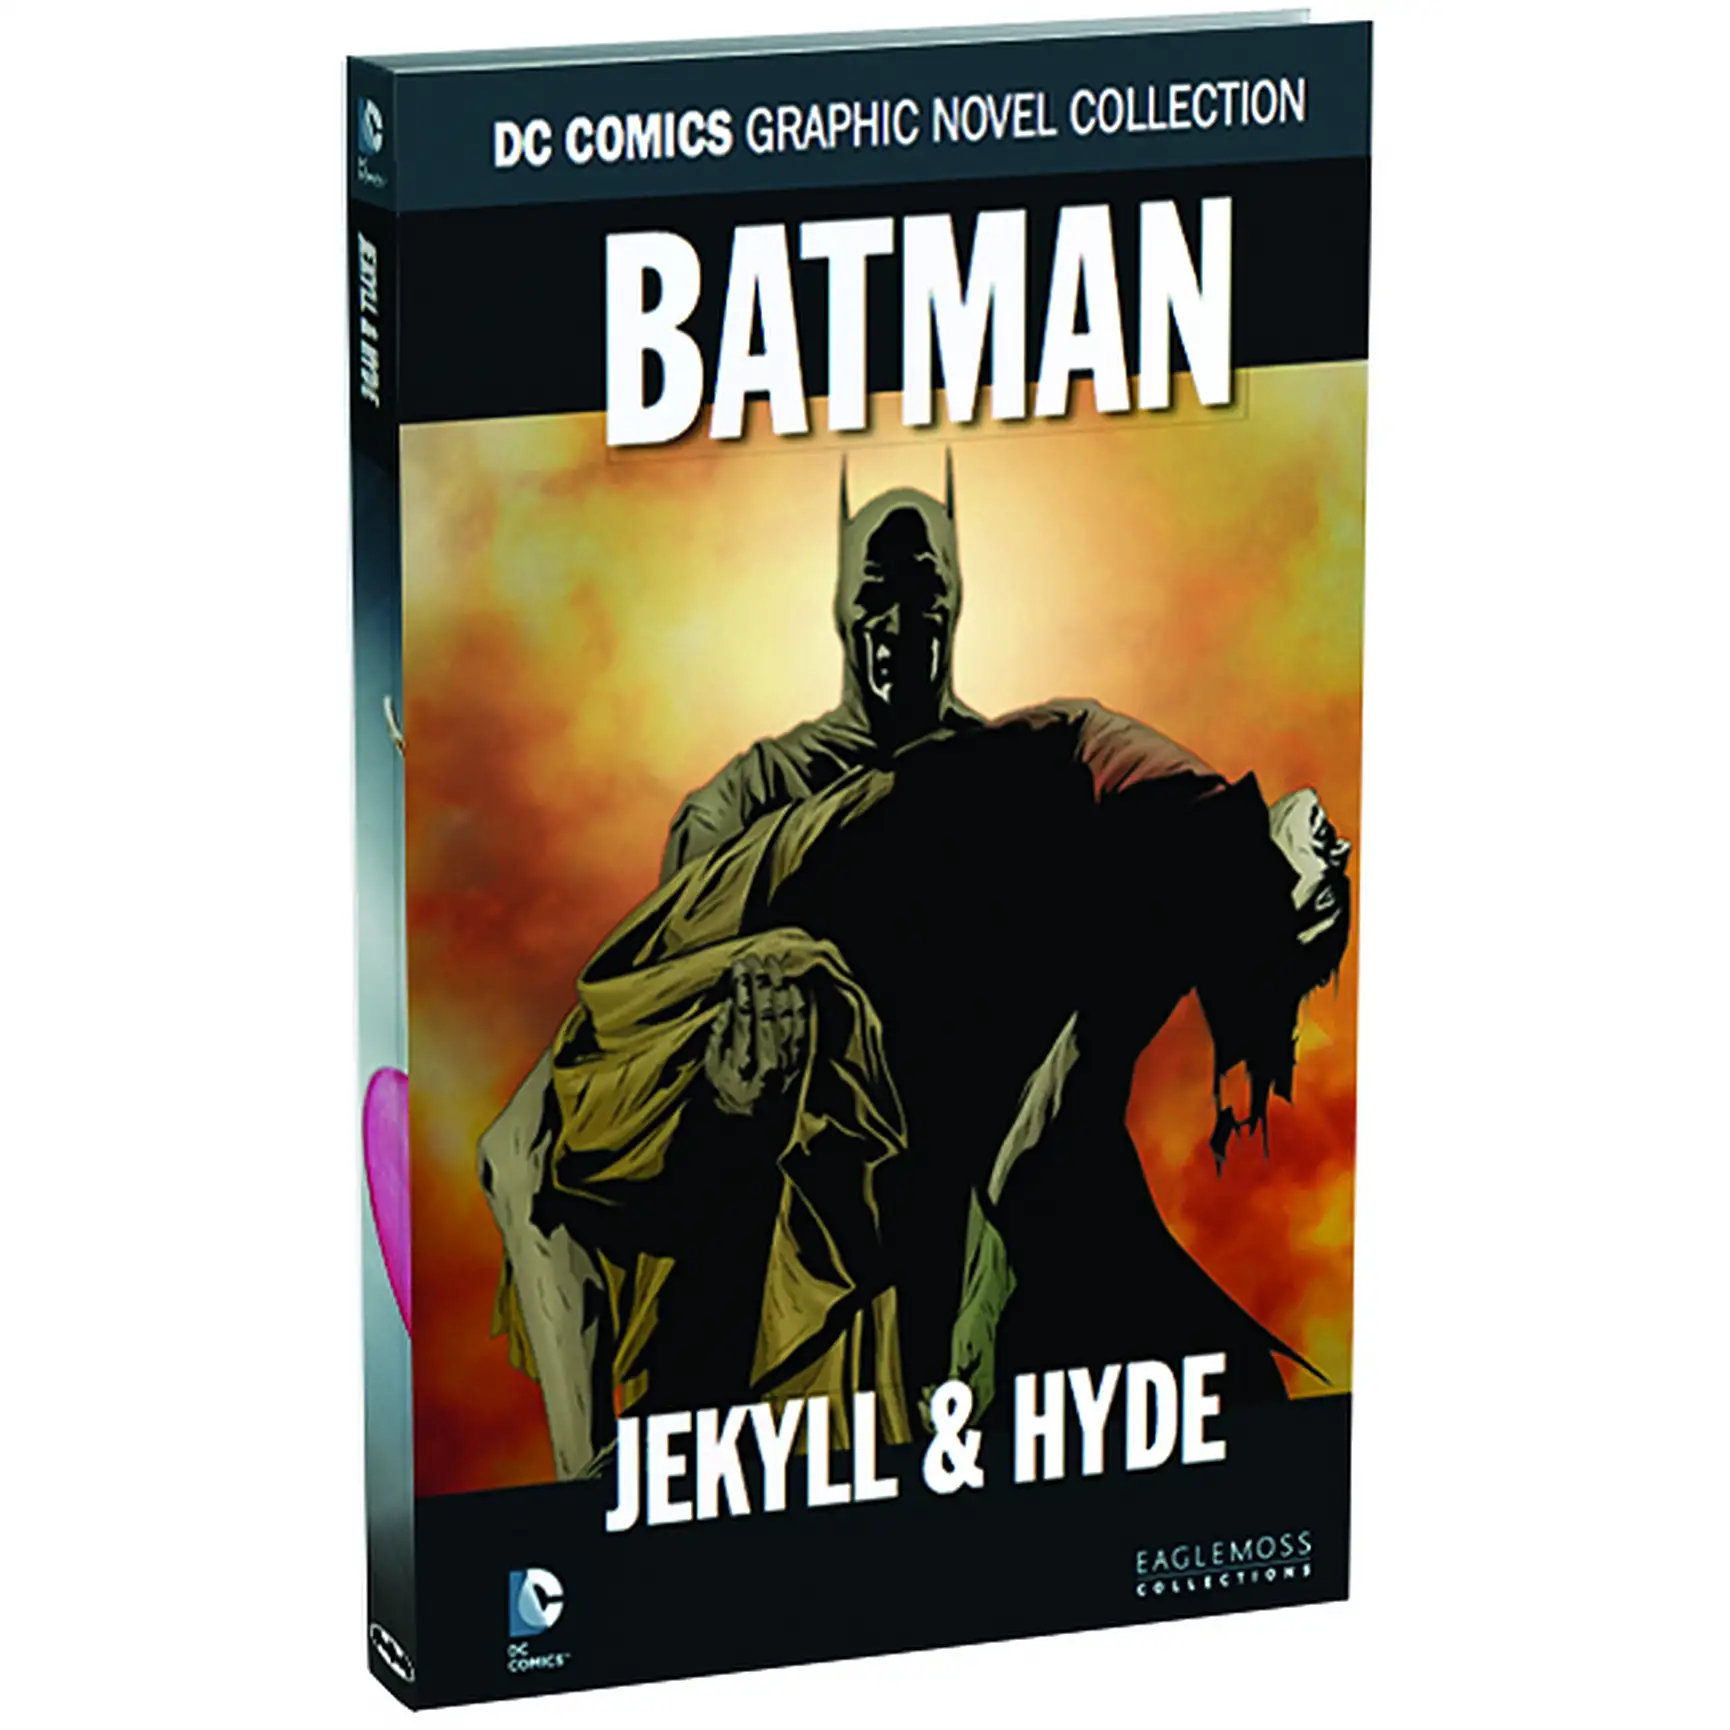 DC Comics Graphic Novel Collection Batman - Jekyll & Hyde